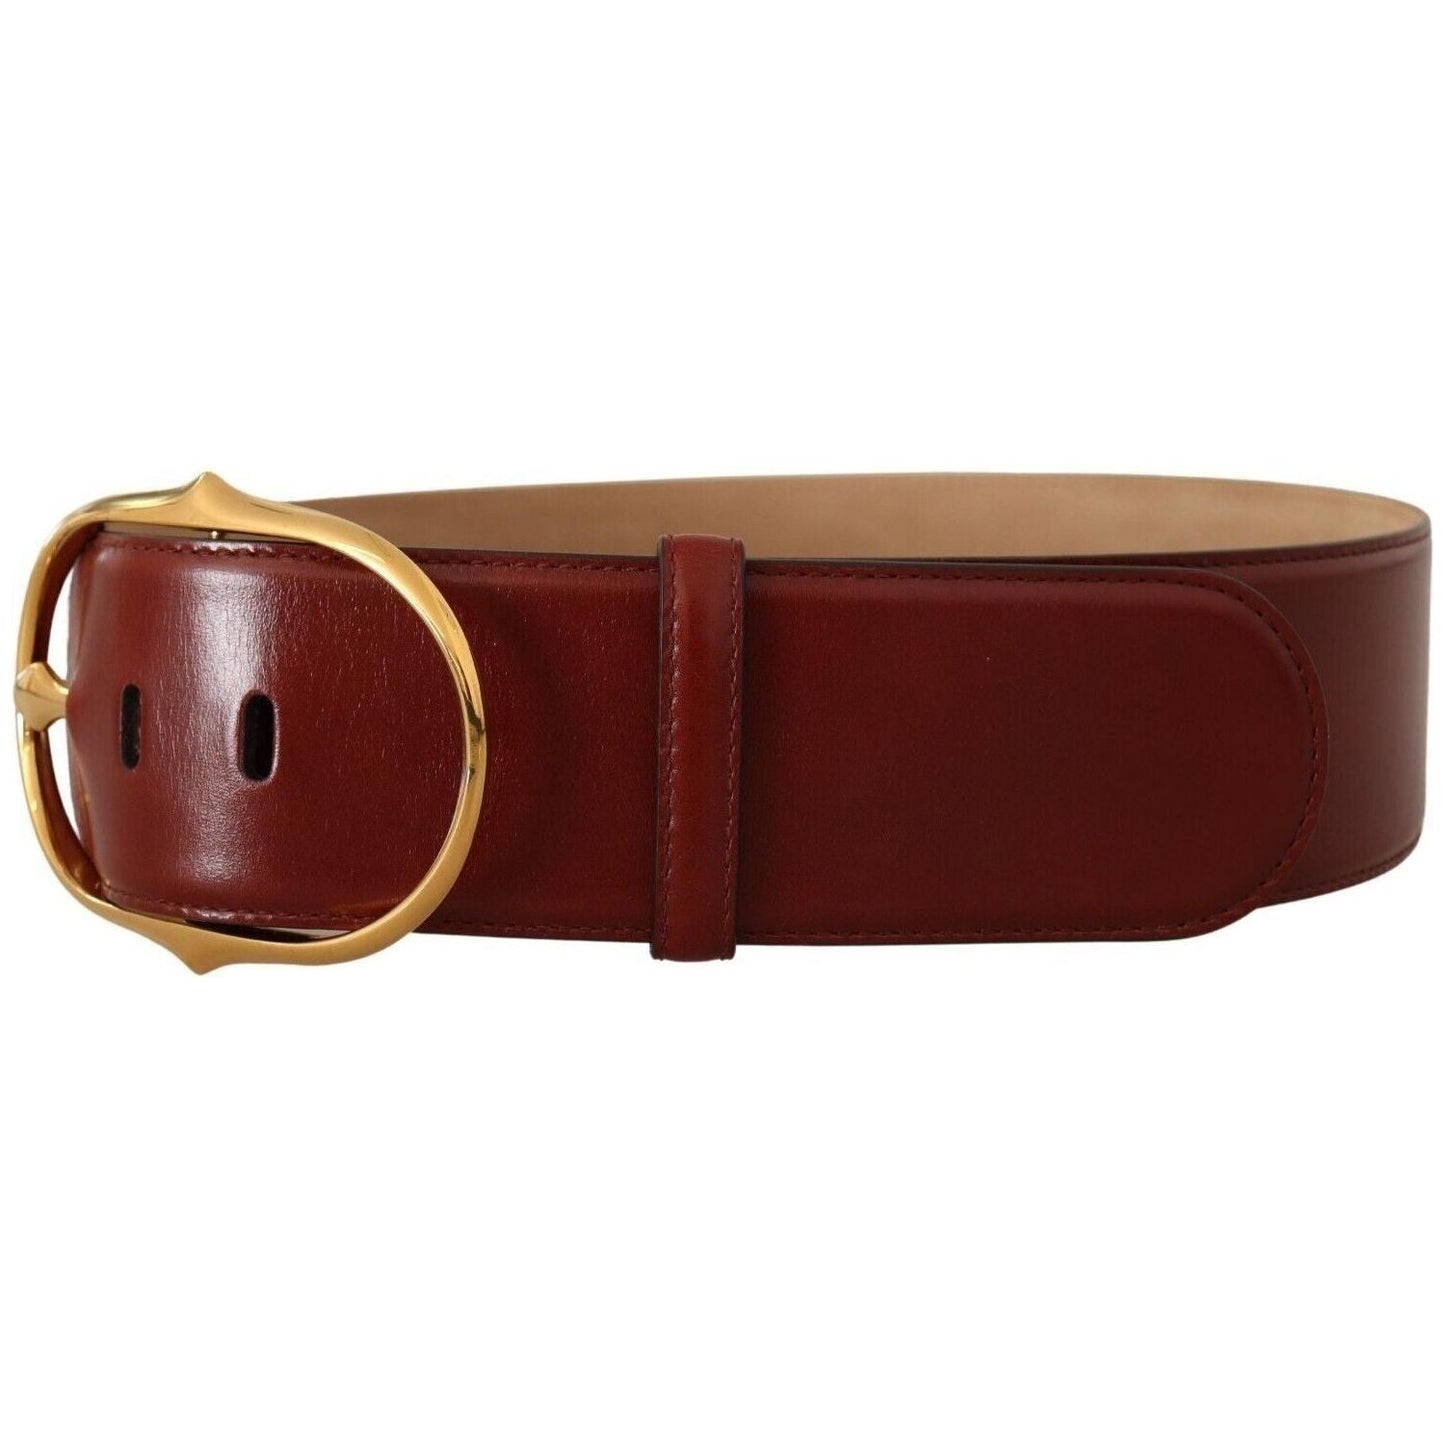 Dolce & Gabbana Elegant Maroon Leather Belt with Gold Buckle WOMAN BELTS maroon-leather-gold-metal-oval-buckle-belt s-l1600-1-264-5207b7da-077.jpg